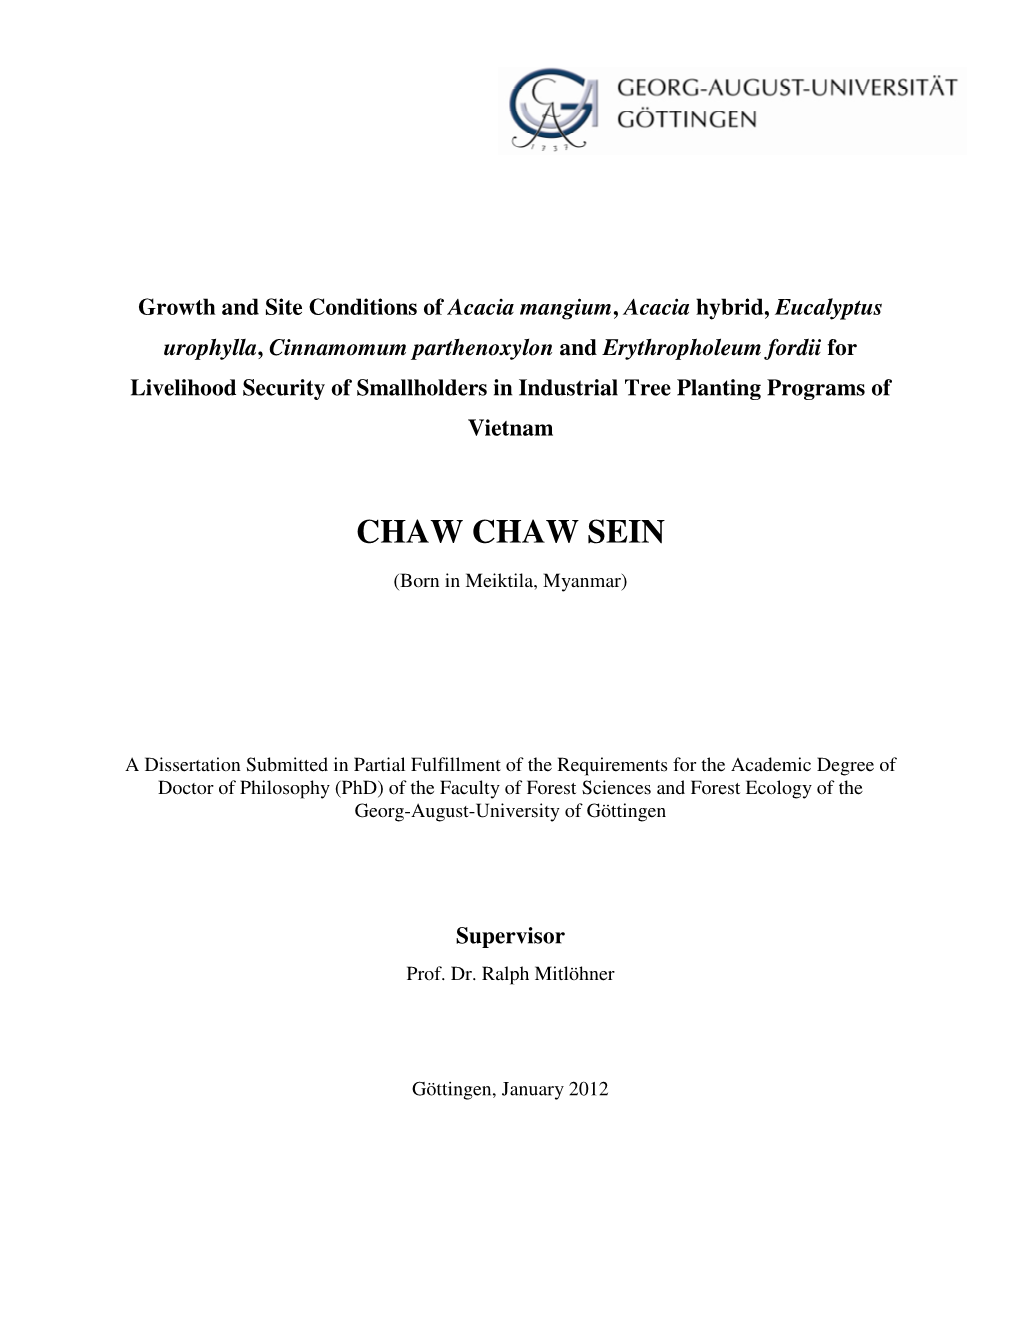 Chaw Chaw Sein